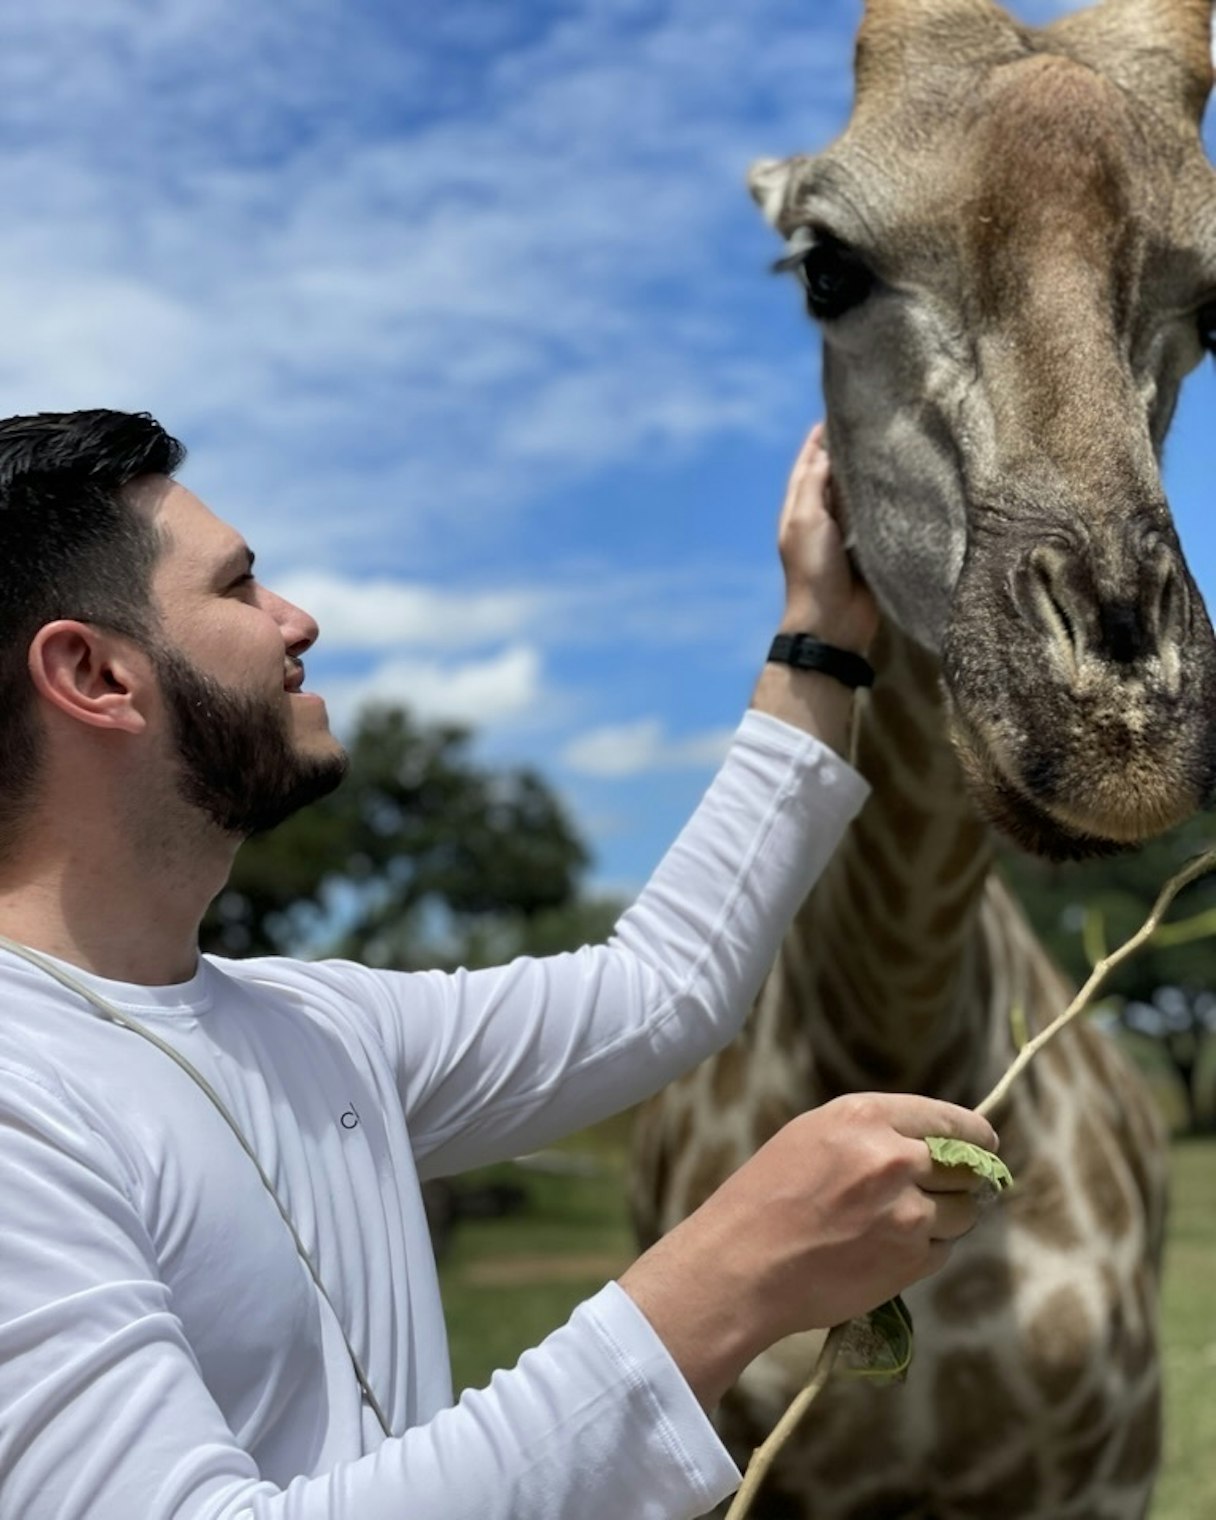 Yohann with a giraffe